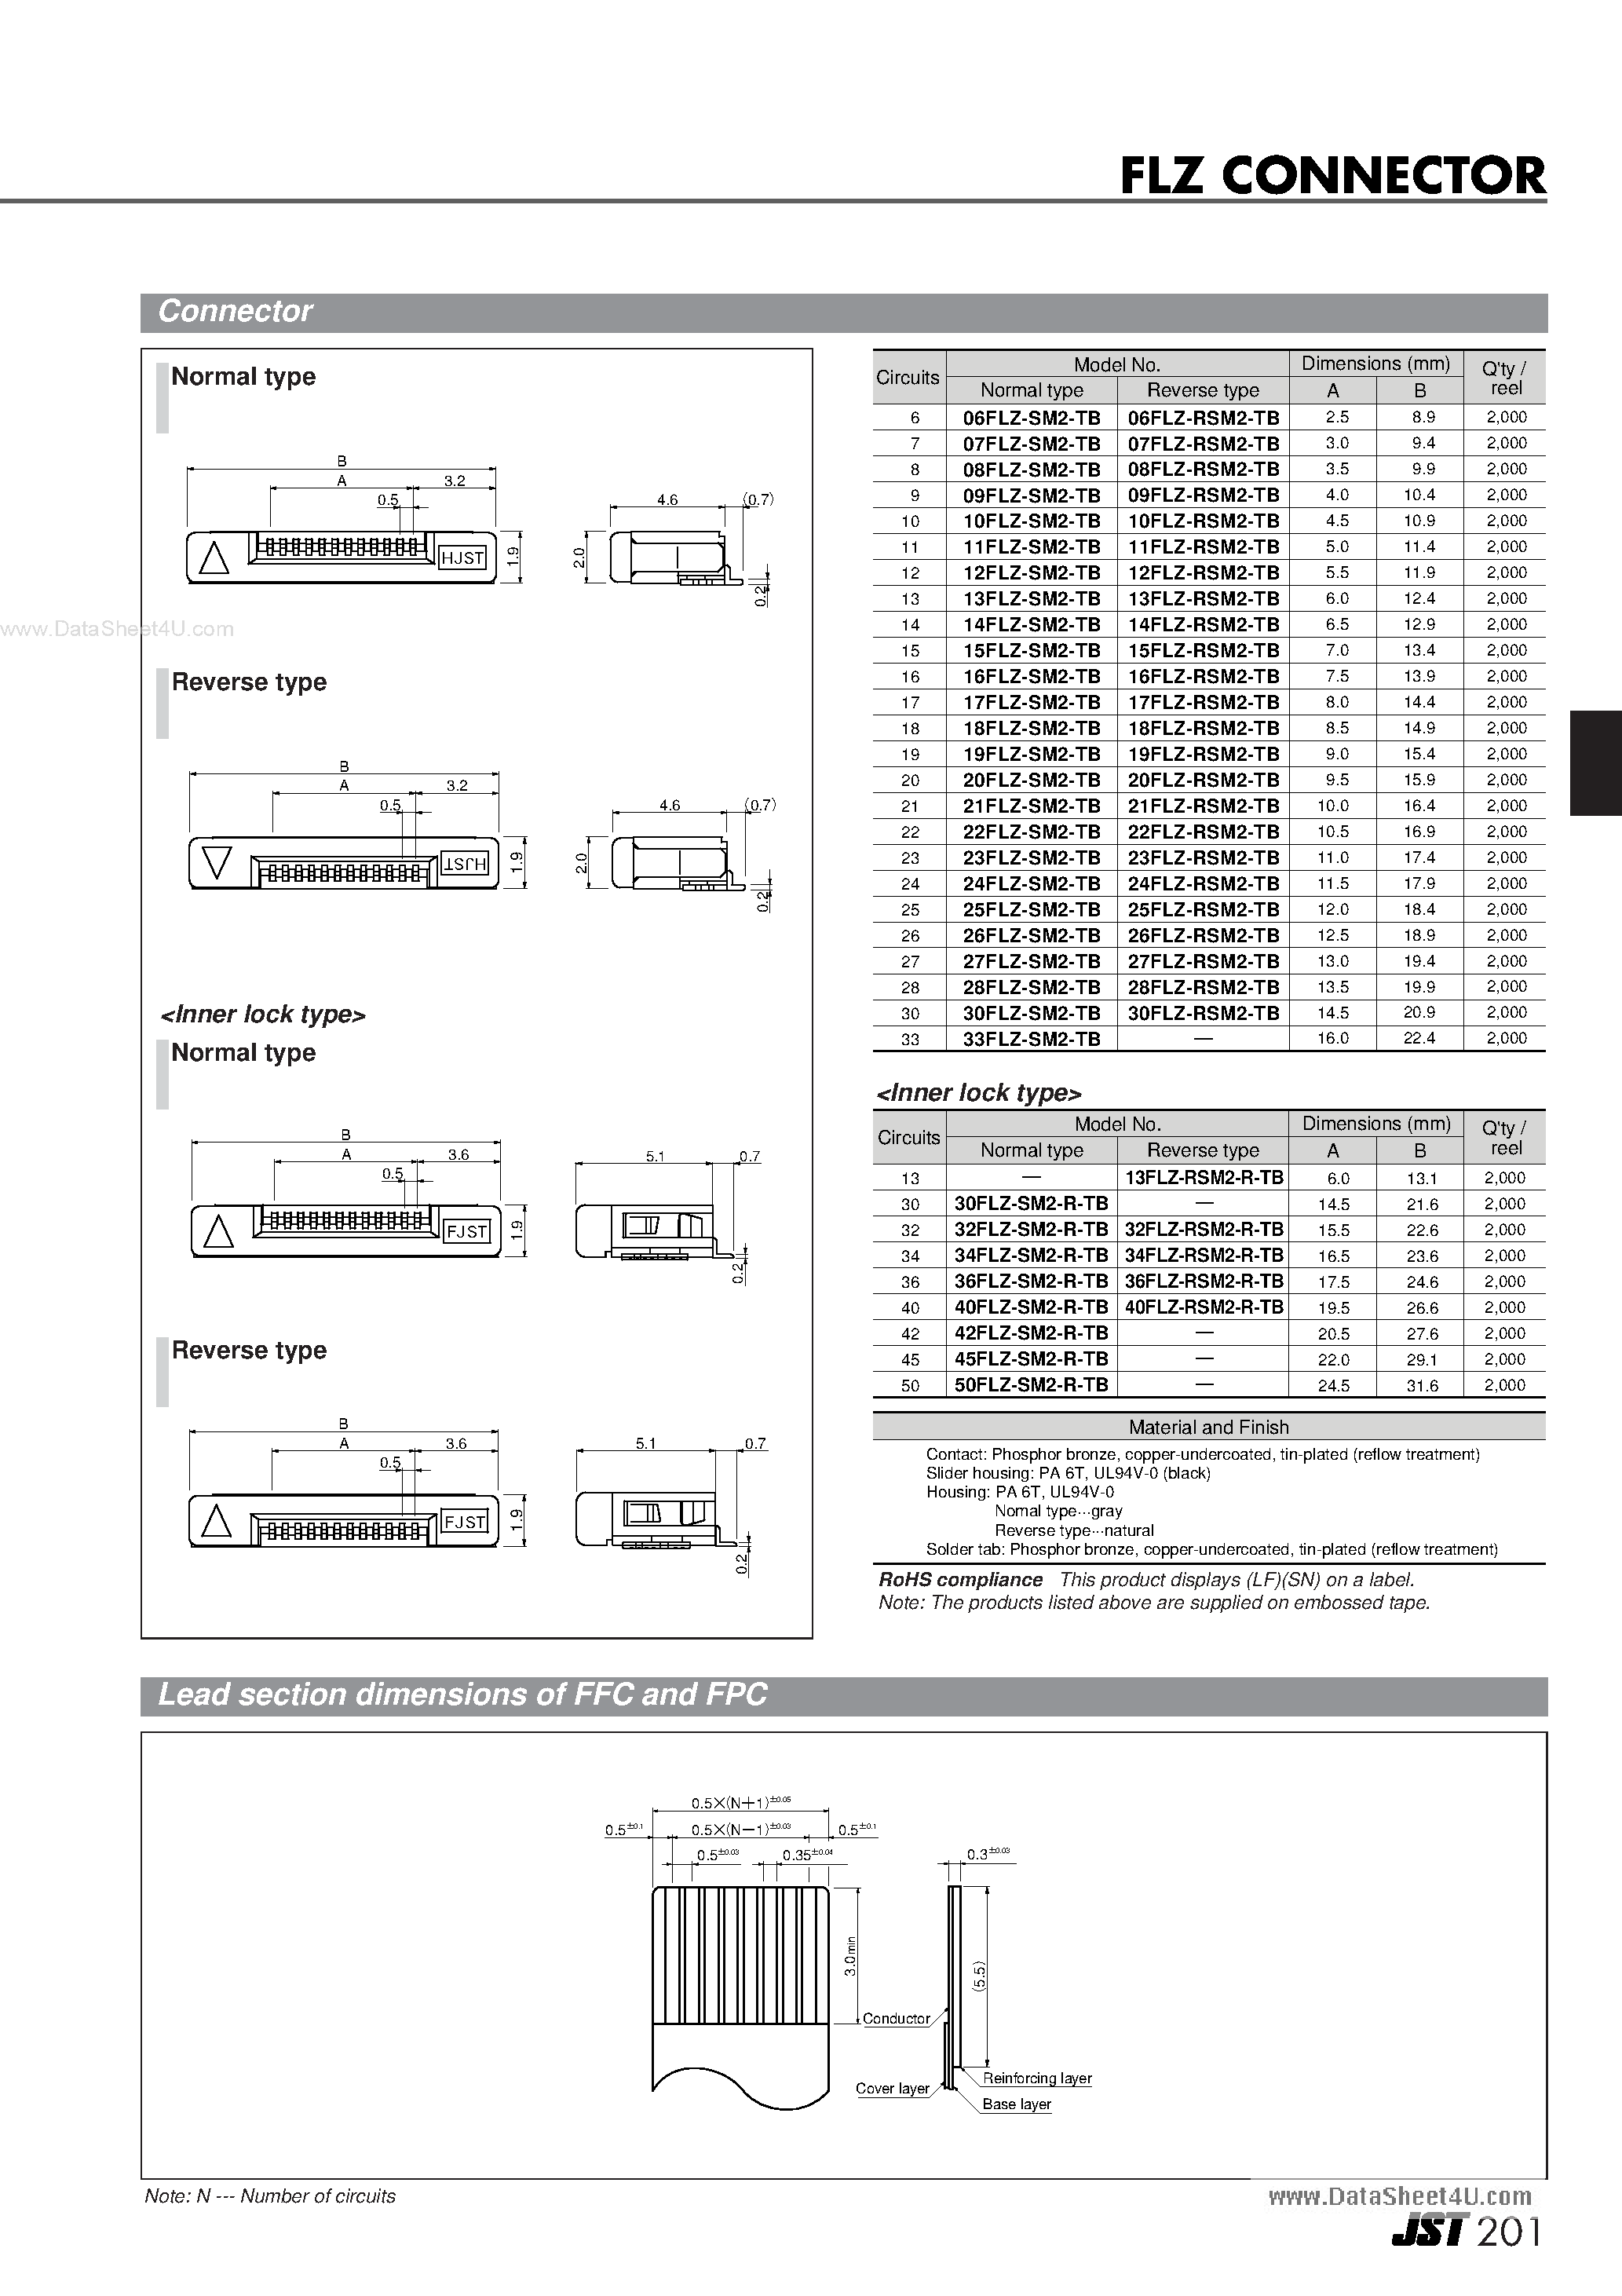 Datasheet 32FLZ-RSM1-R-TB - Connector page 2